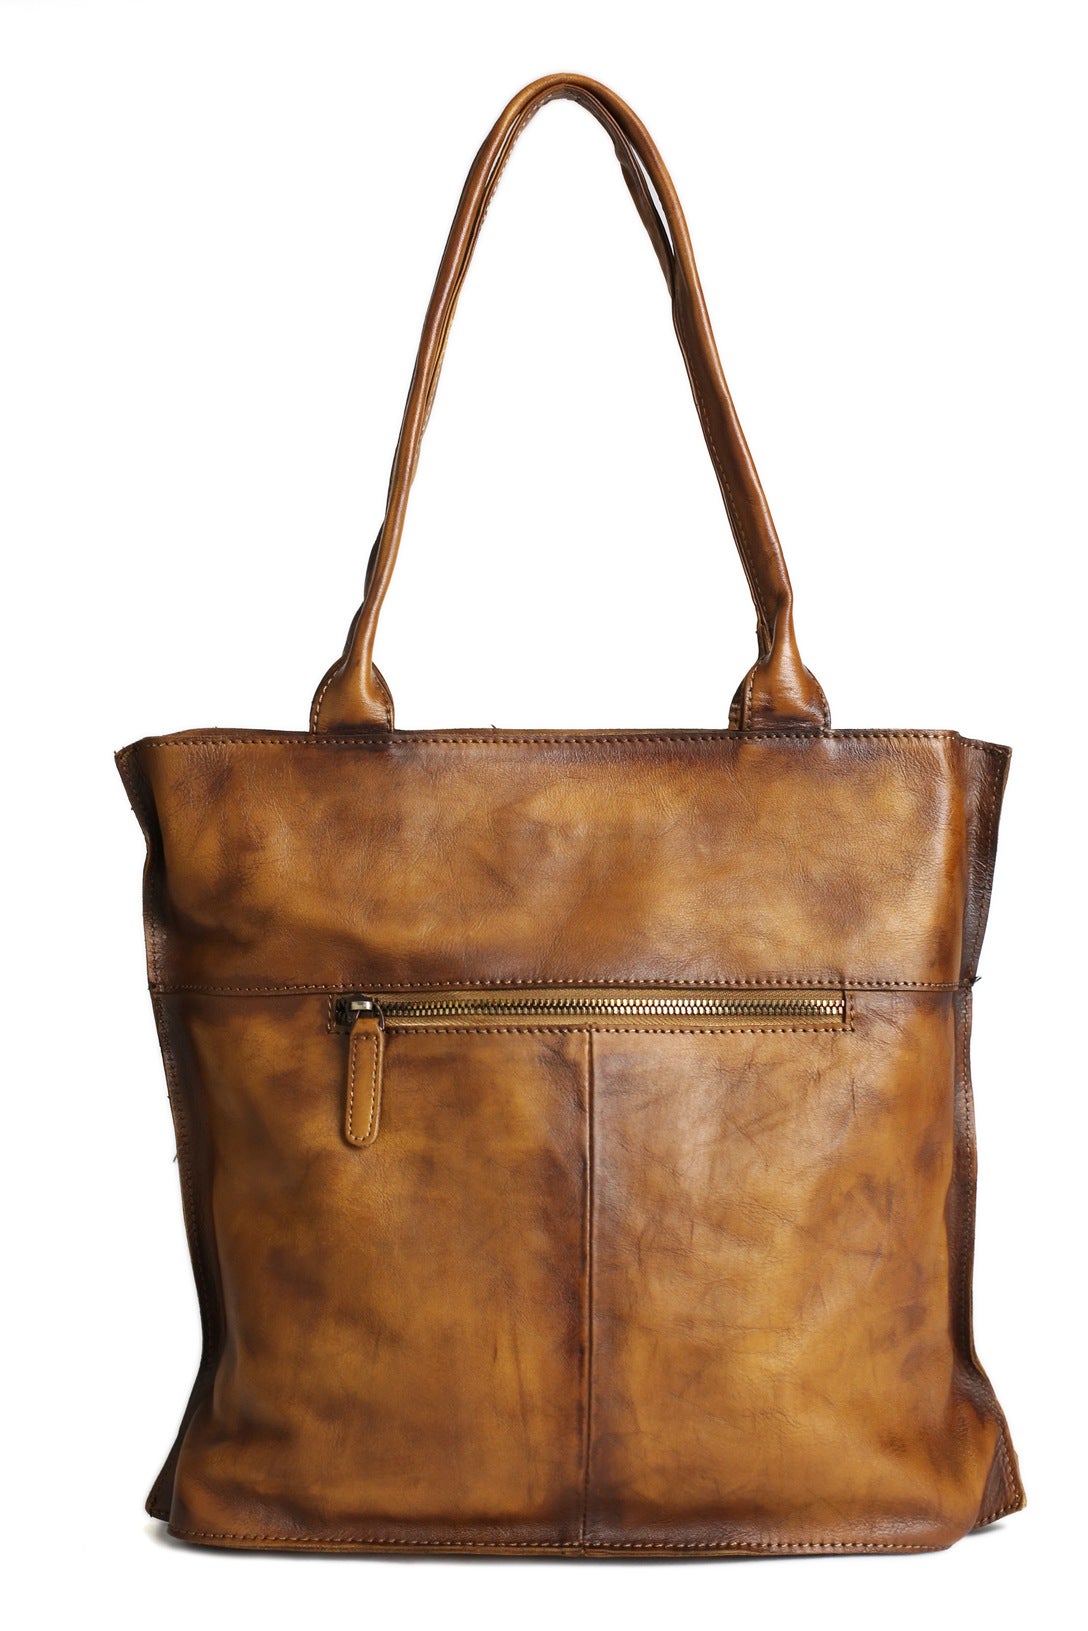 MoshiLeatherBag - Handmade Leather Bag Manufacturer — Vintage Brown Leather Tote Bag, Women&#39;s ...